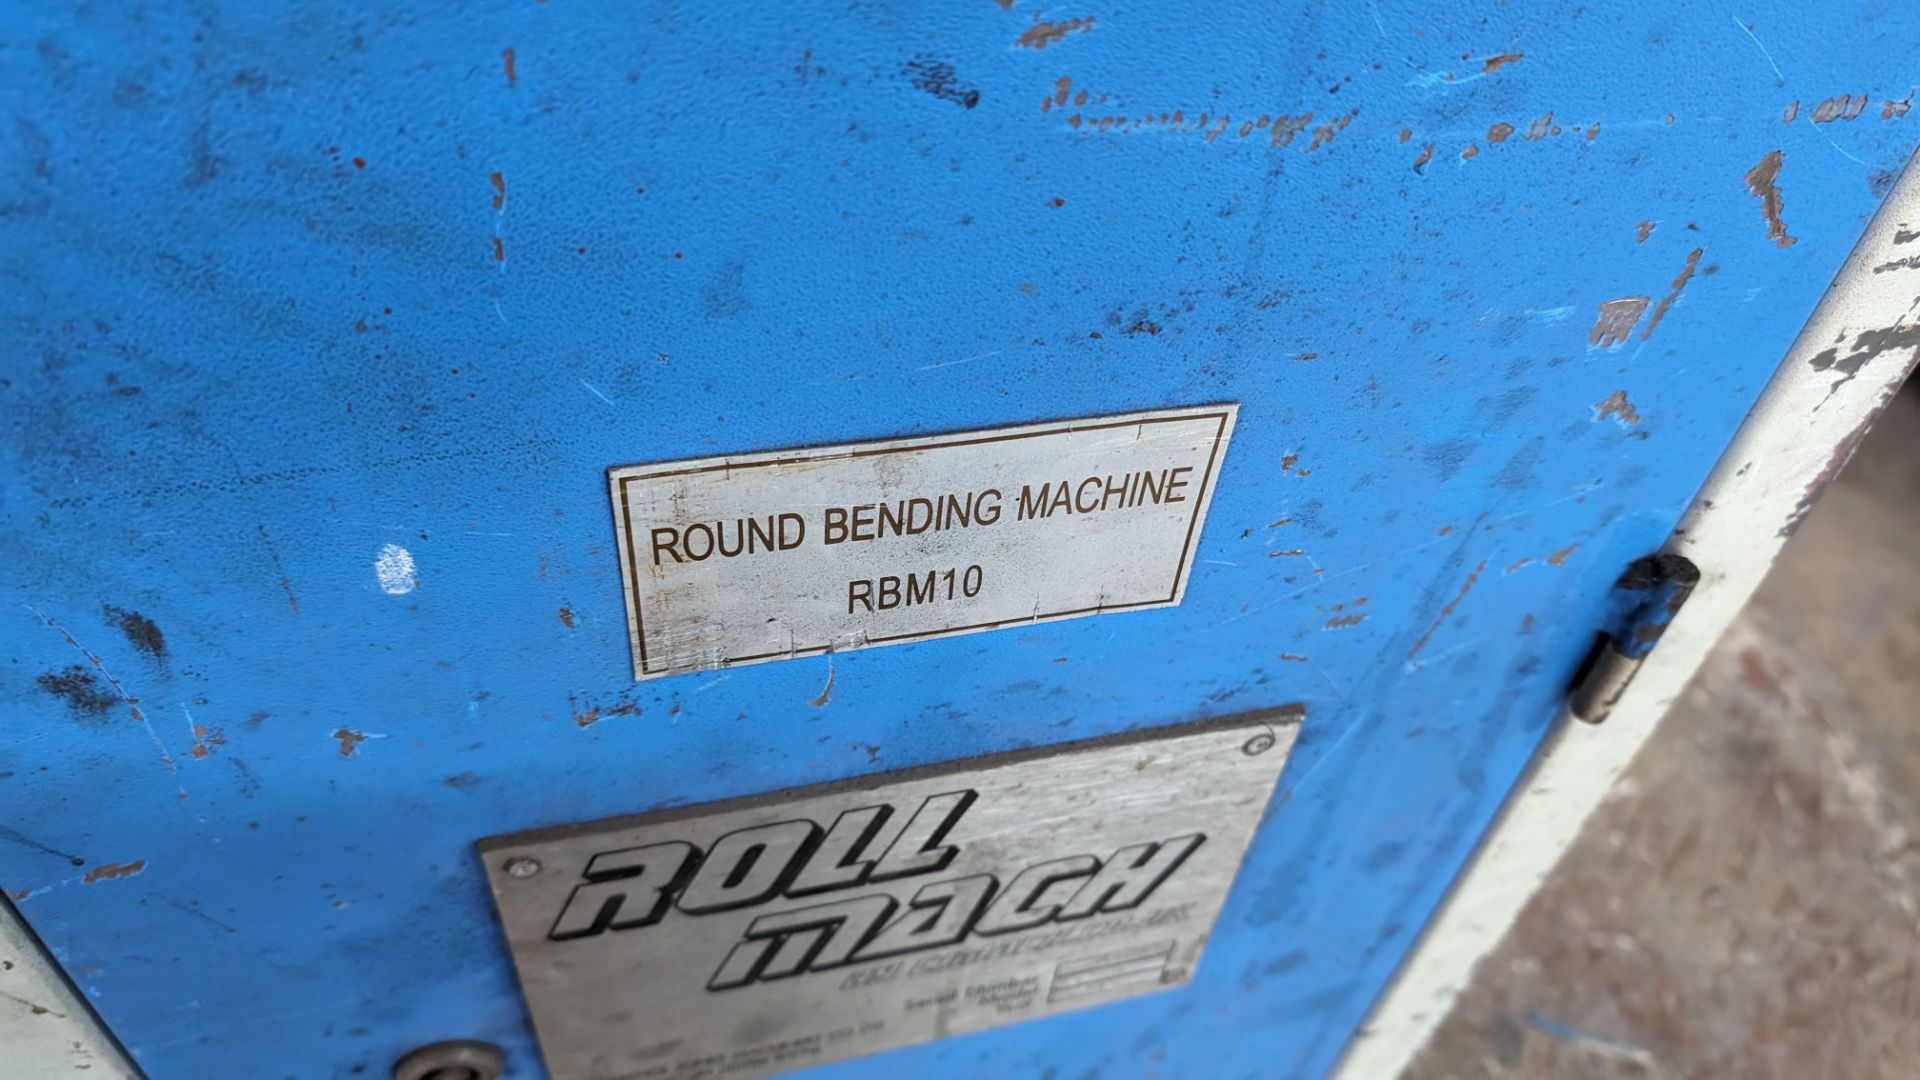 Roll Mach round bending machine model RBM10 - Image 6 of 7